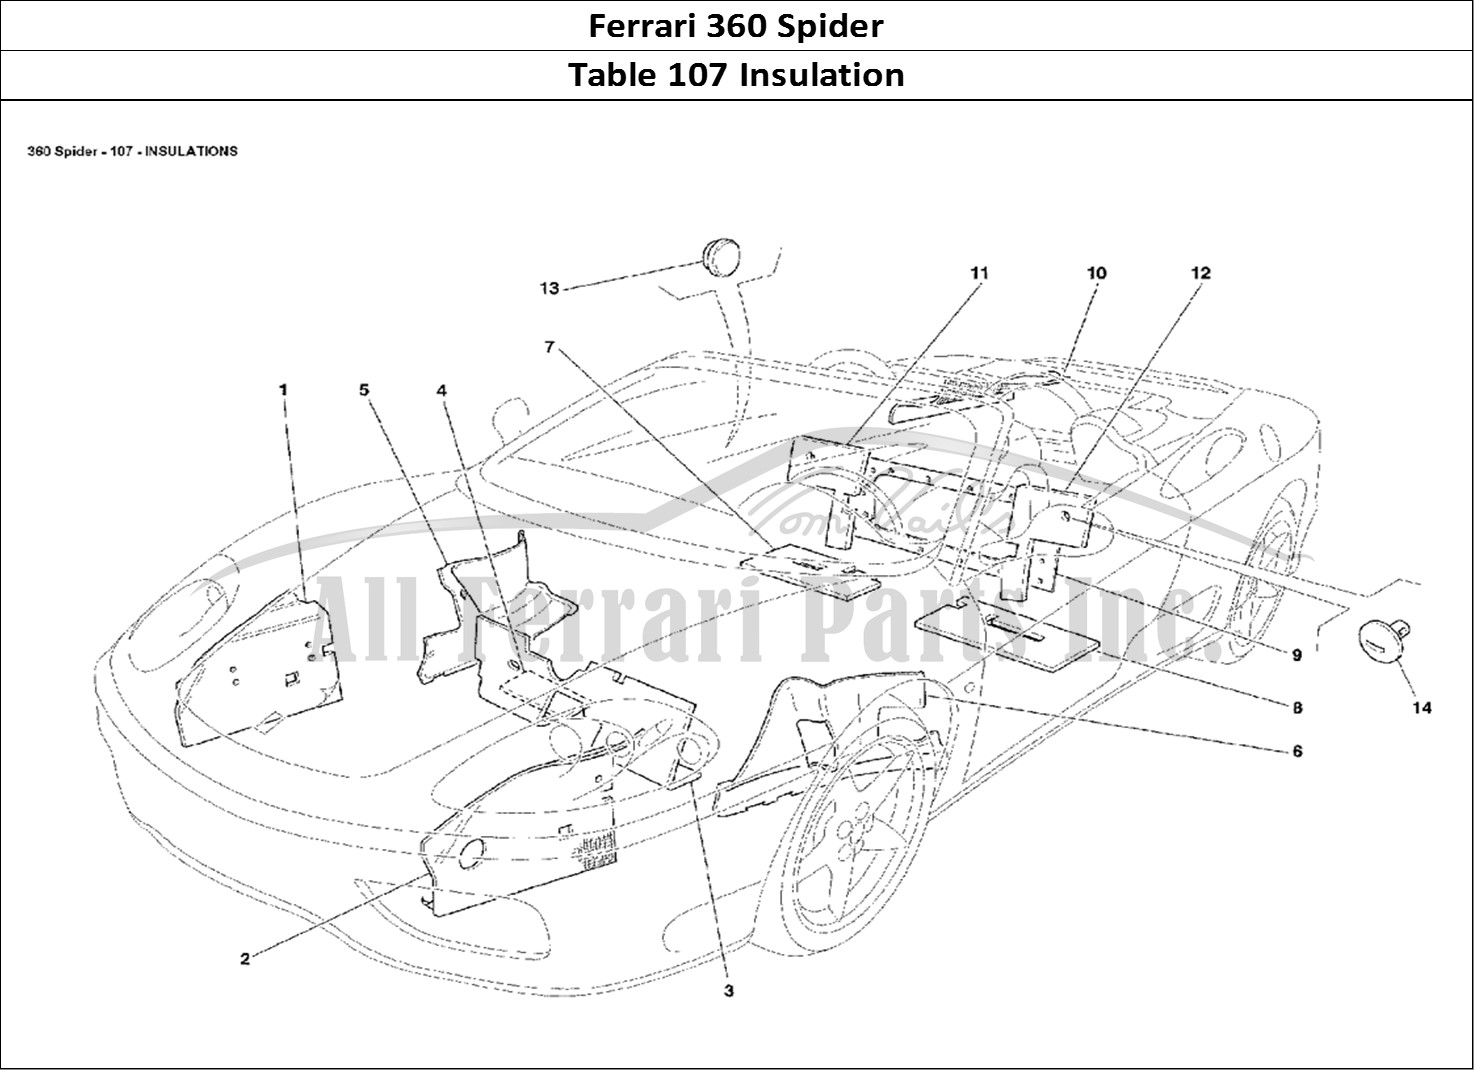 Ferrari Parts Ferrari 360 Spider Page 107 Insulations